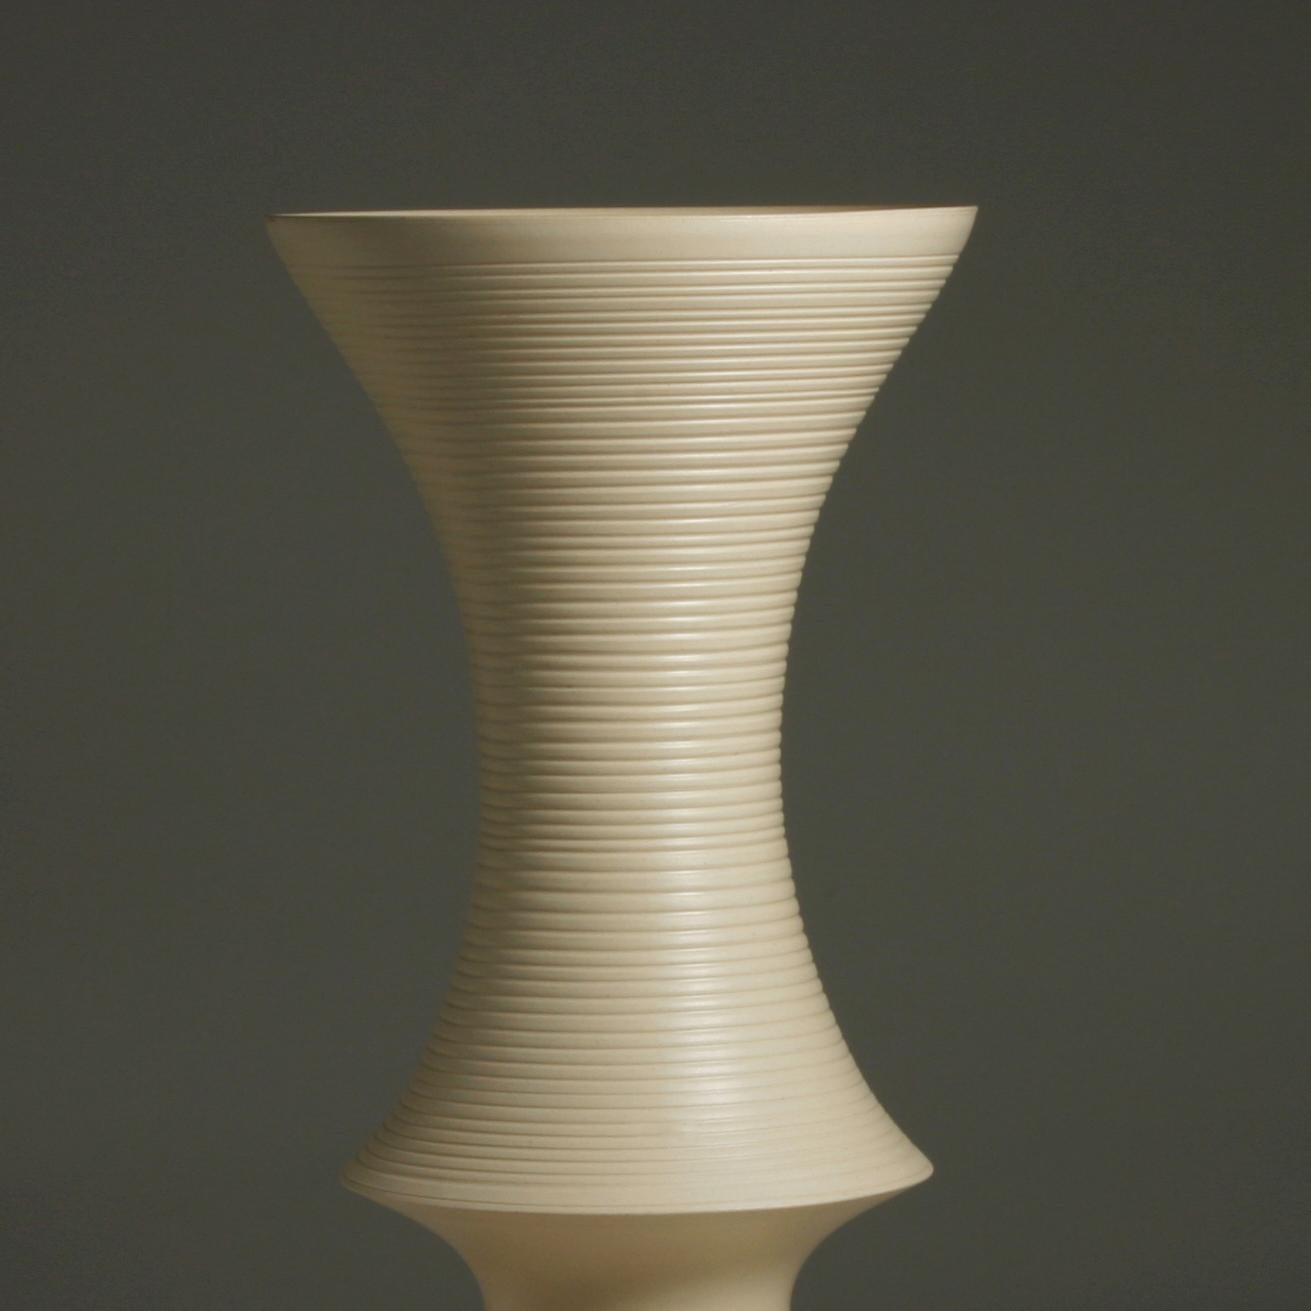 English Large Ceramic Vase by Anna Silverton